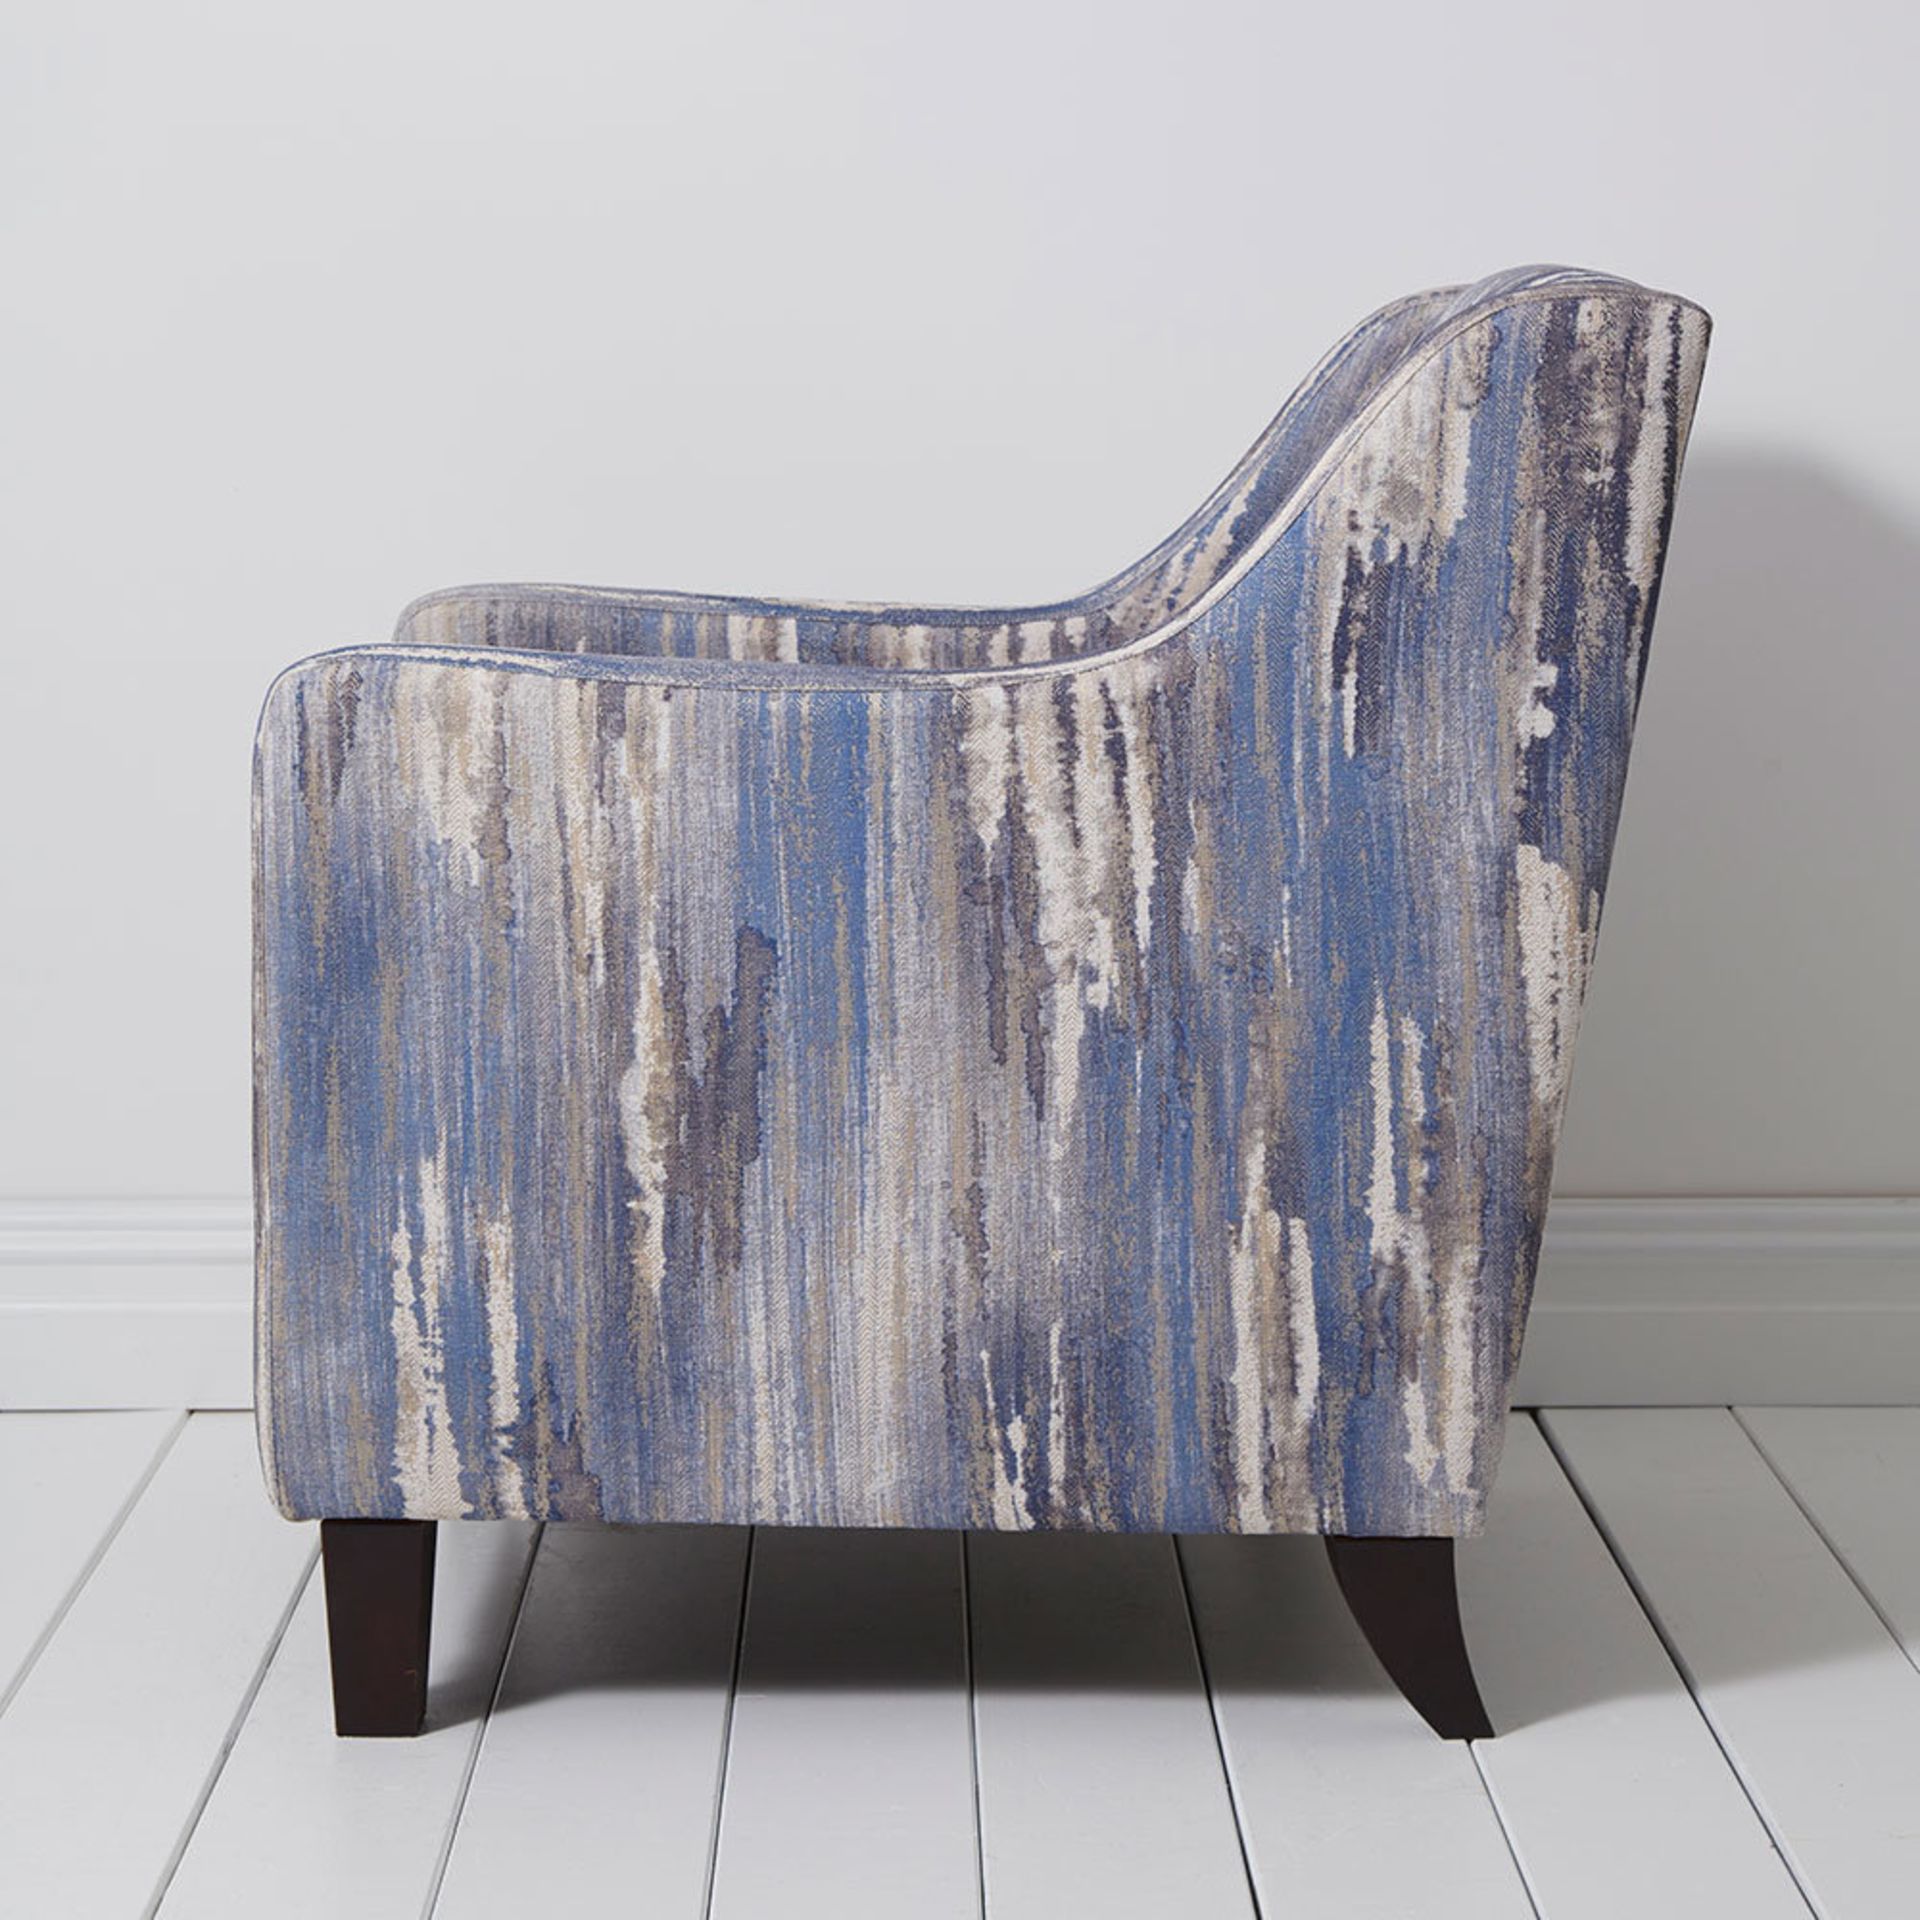 1 x Hampton Armchair by Clarke & Clarke - Latour Indigo Woven Fabric and Dark Wooden Legs - RRP £699 - Image 4 of 8